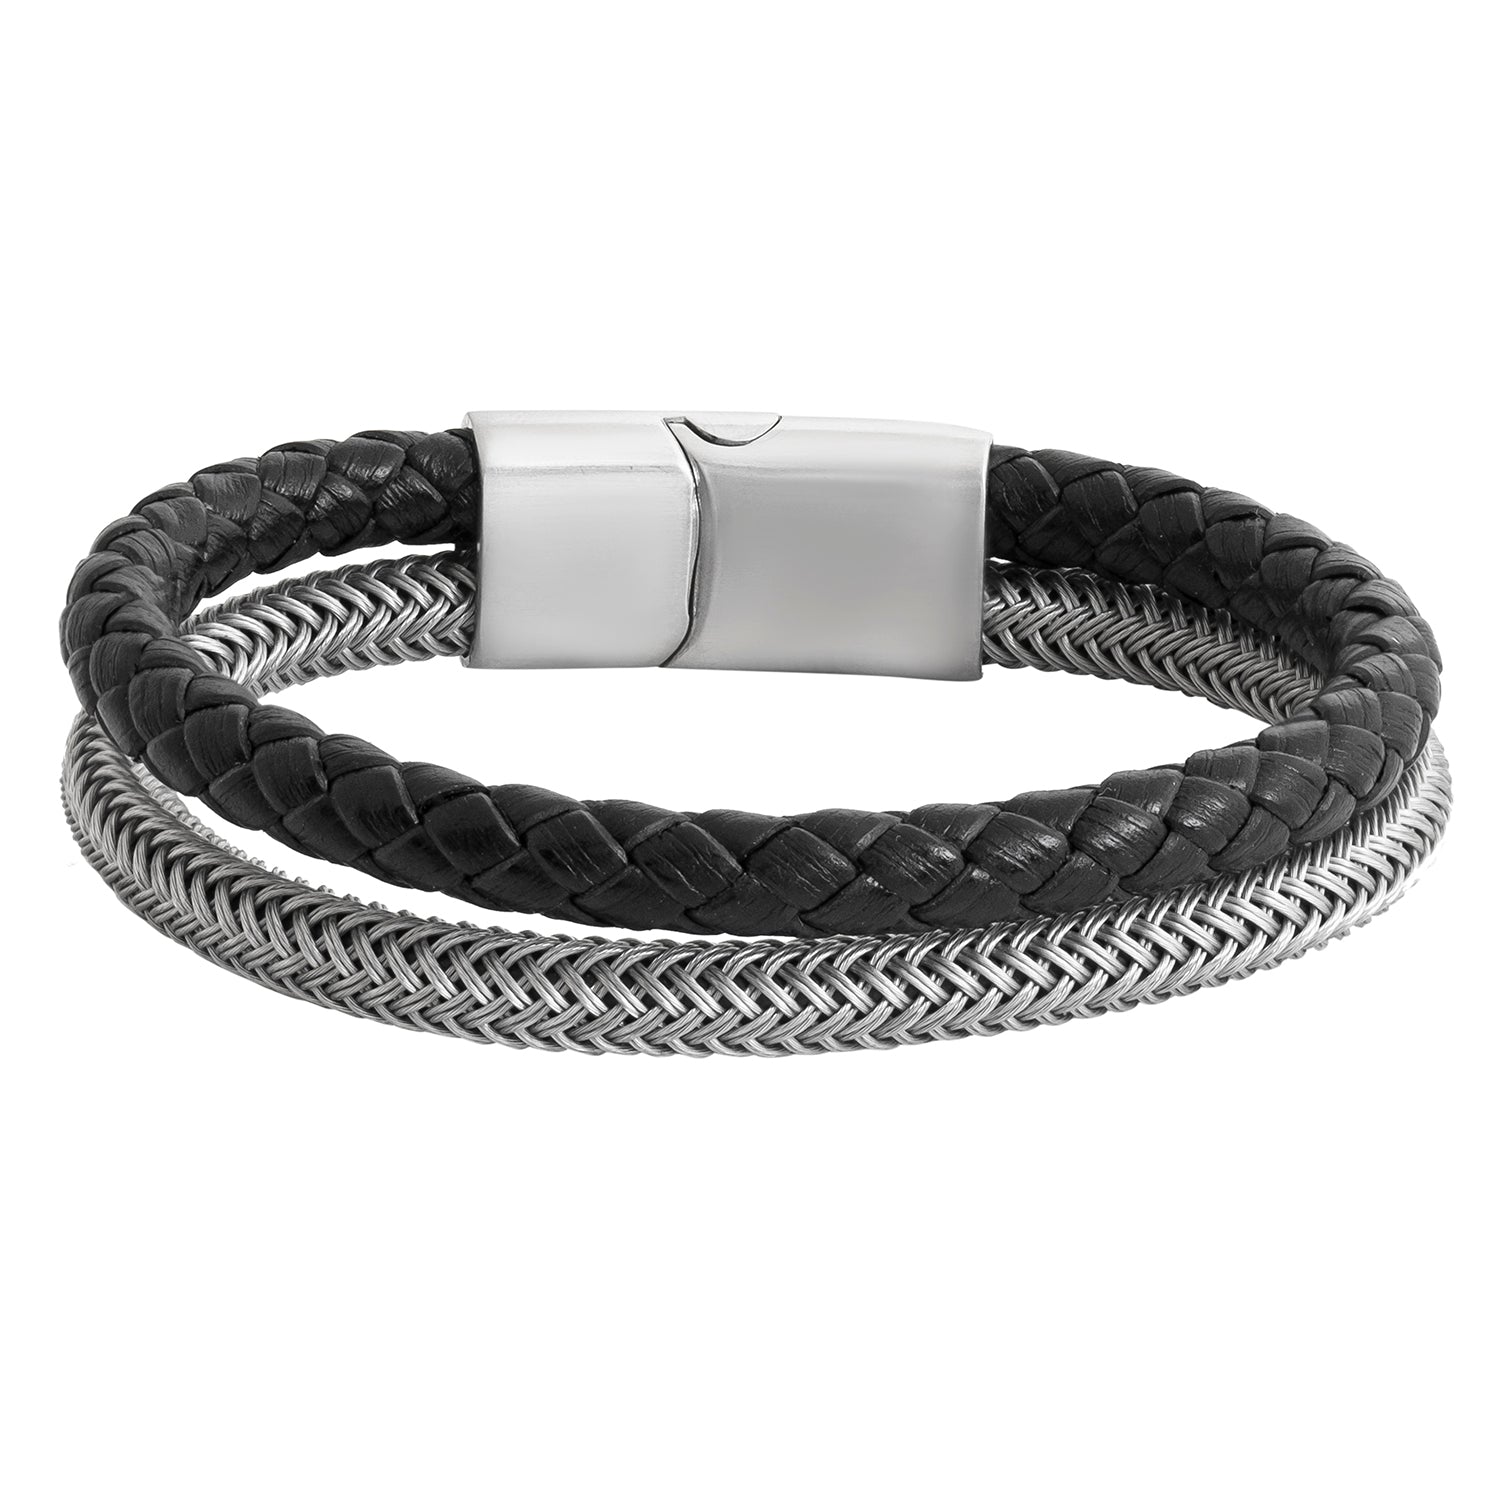 Buy Bodha Men Black Leather Bracelet - Bracelet for Men 14864084 | Myntra